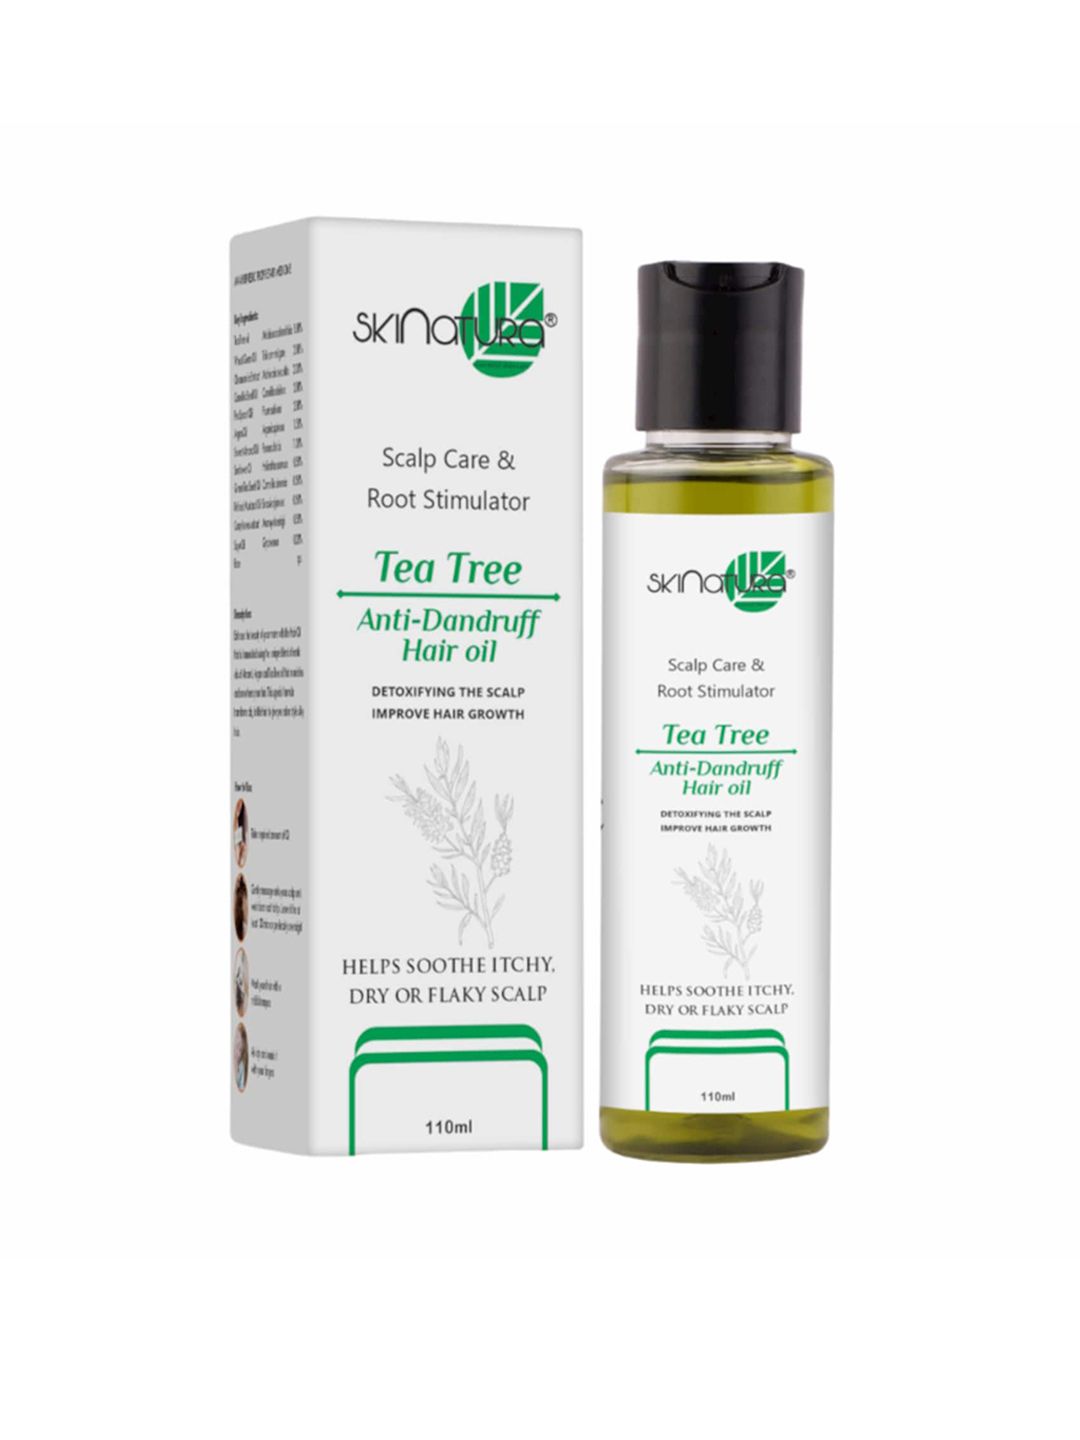 Skinatura Tea Tree Anti-Dandruff Hair Oil - Scalp Care & Root Stimulator - 110ml Price in India